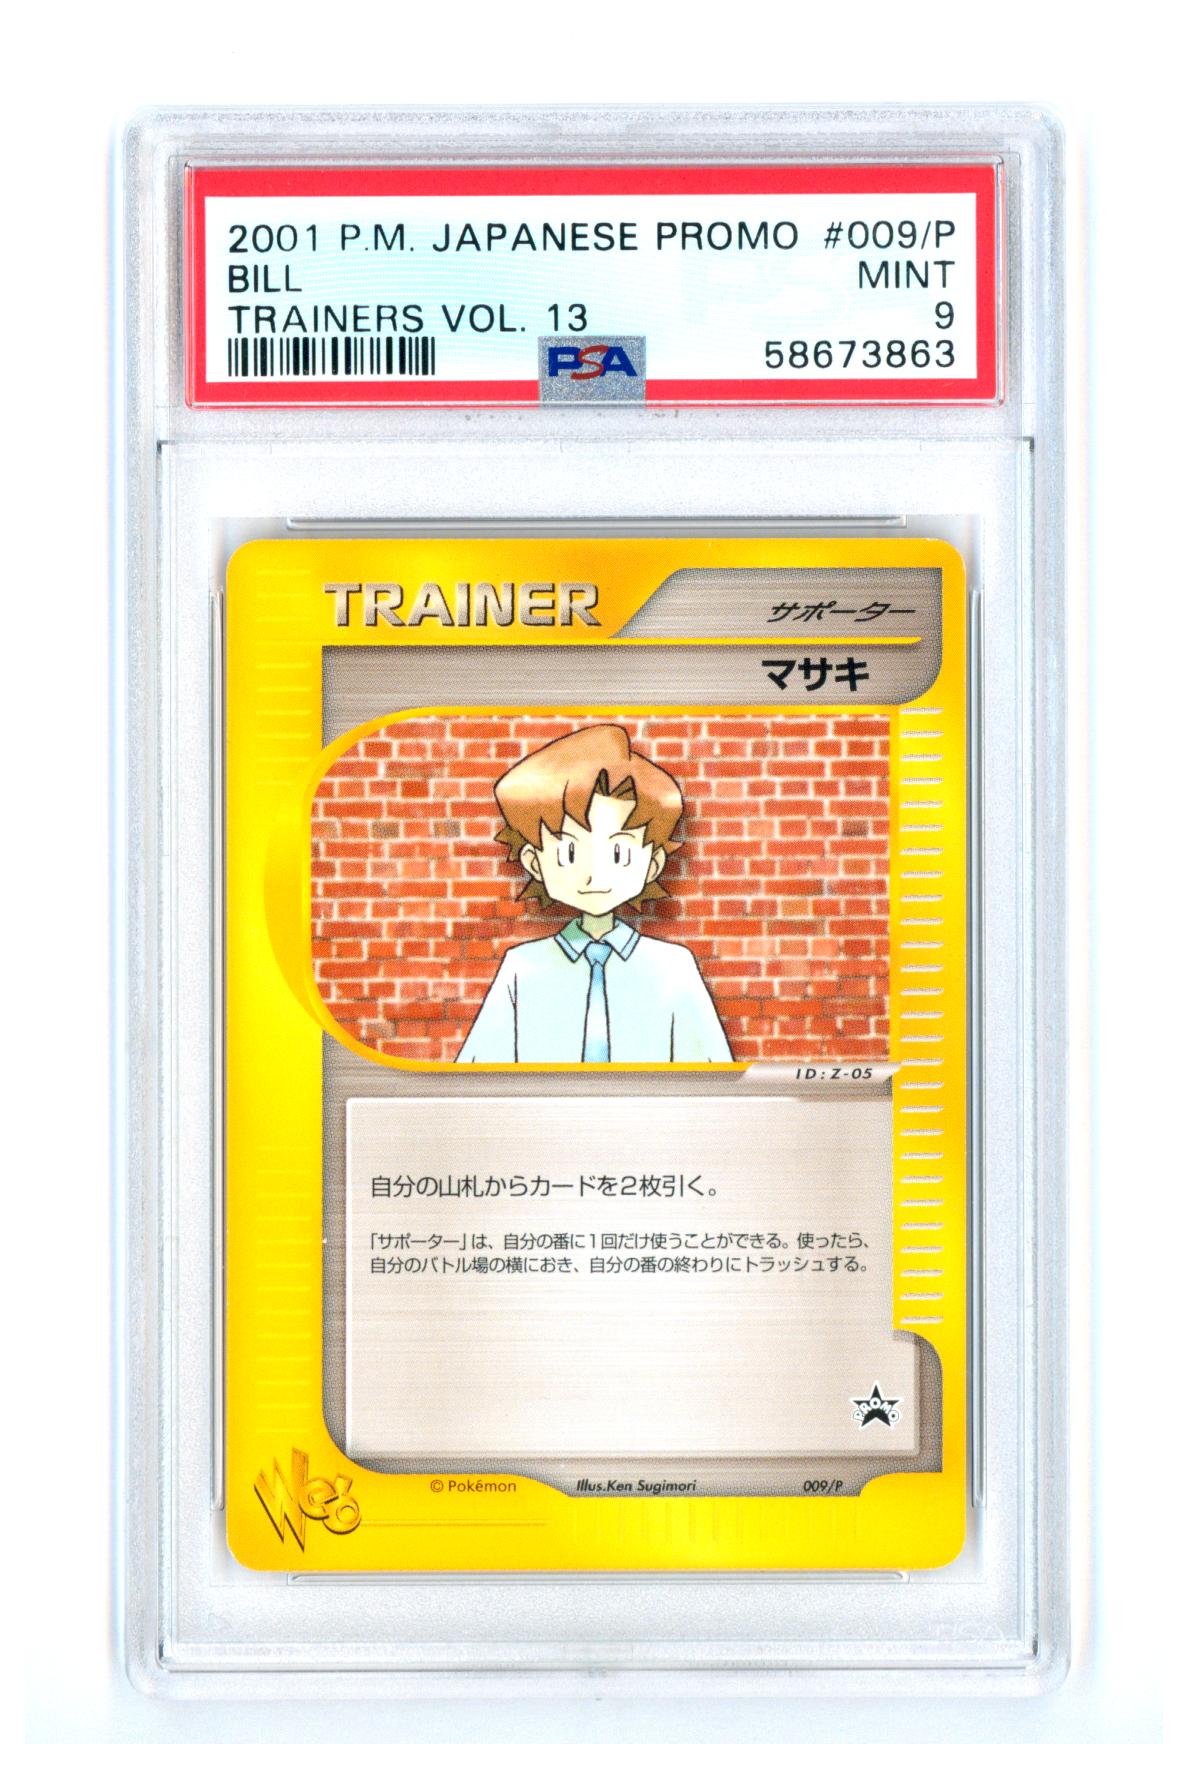 Bill 009/P - Trainers Vol. 13 Promo - PSA 9 MINT​ - Pokémon